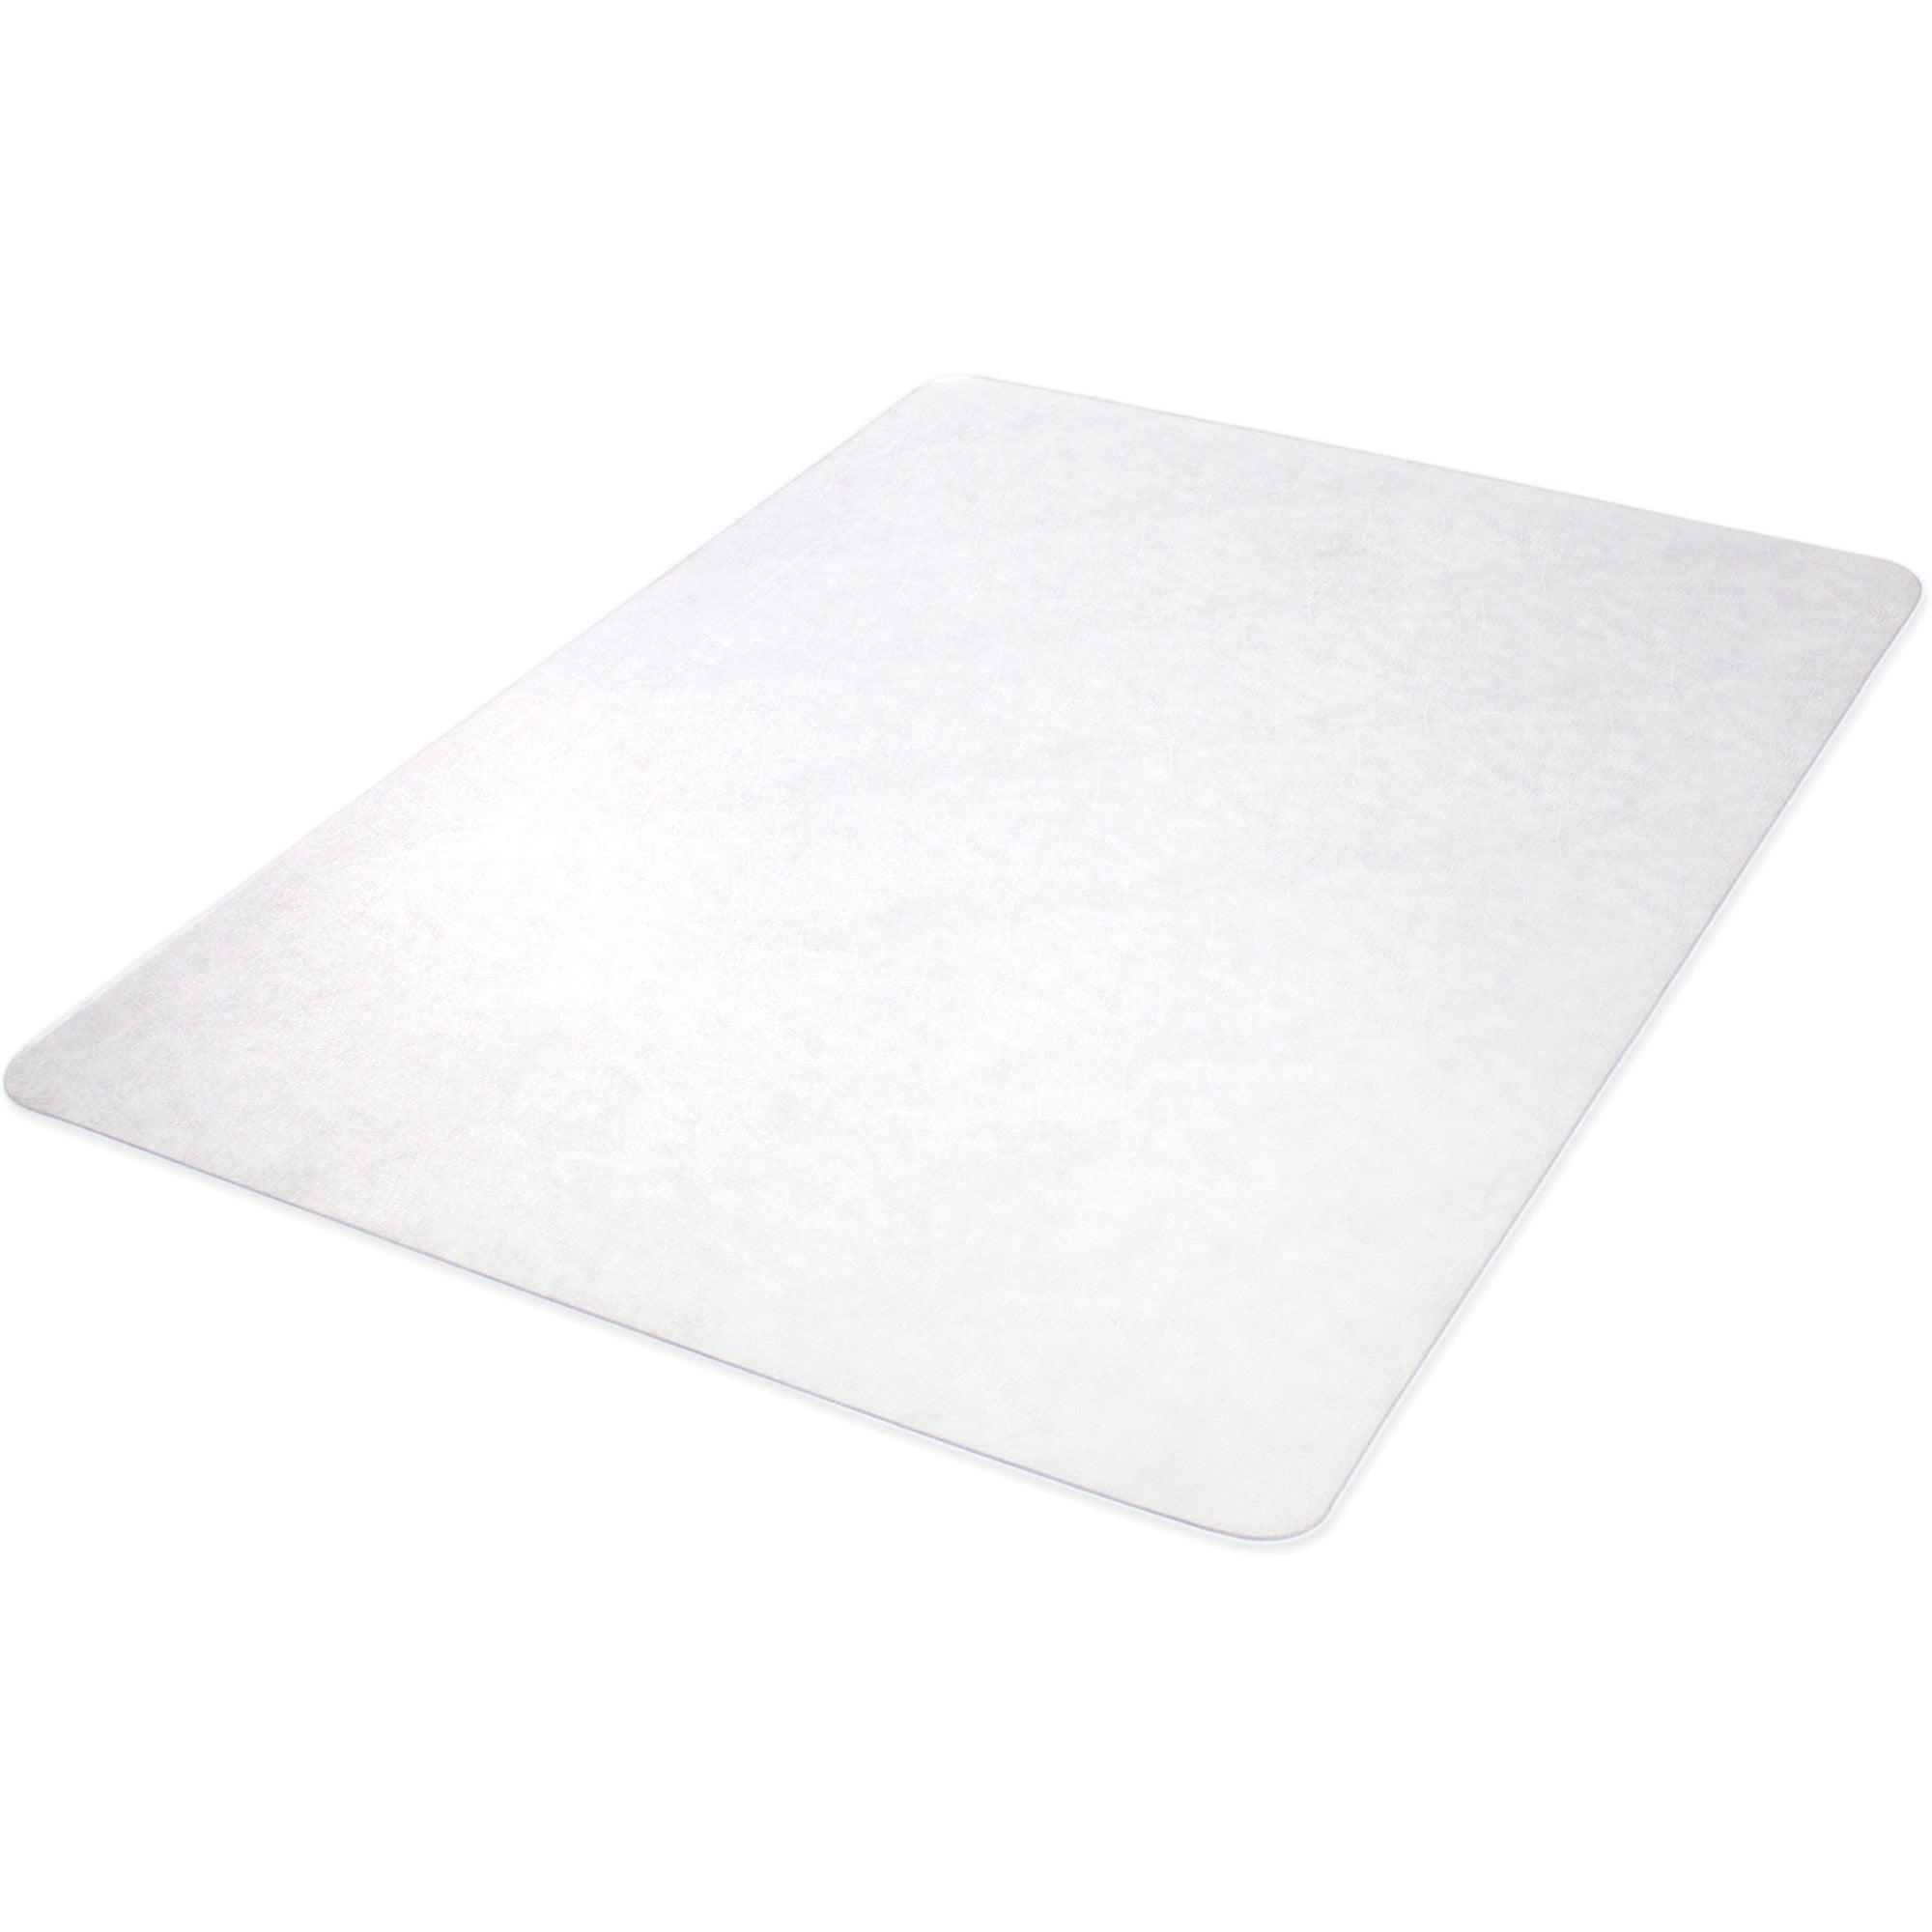 deflecto-duomat-multi-surface-chairmat-carpet-hard-floor-48-length-x-36-width-rectangular-classic-clear-1each_defcm23142duo - 2